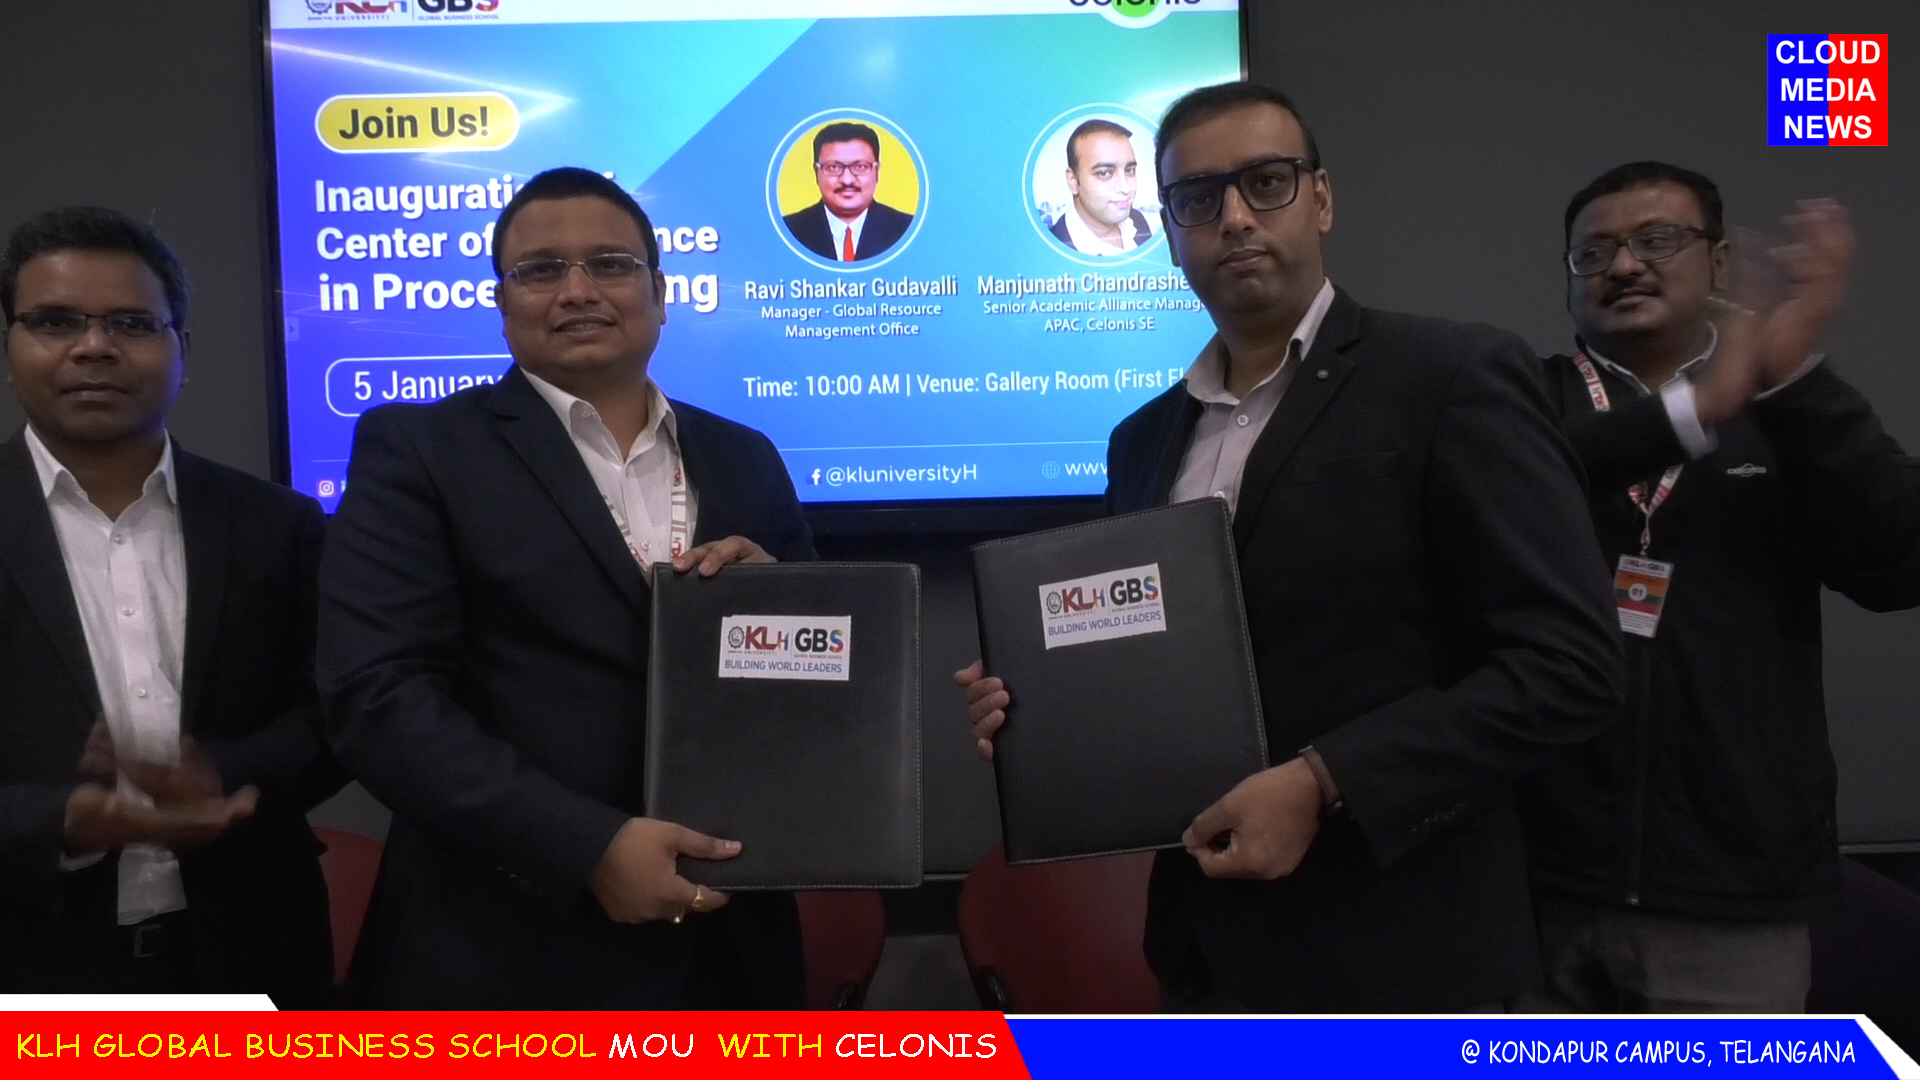 KLH Global Business School MoU  with Celonis @ Kondapur Campus, Telangana | CloudMedia